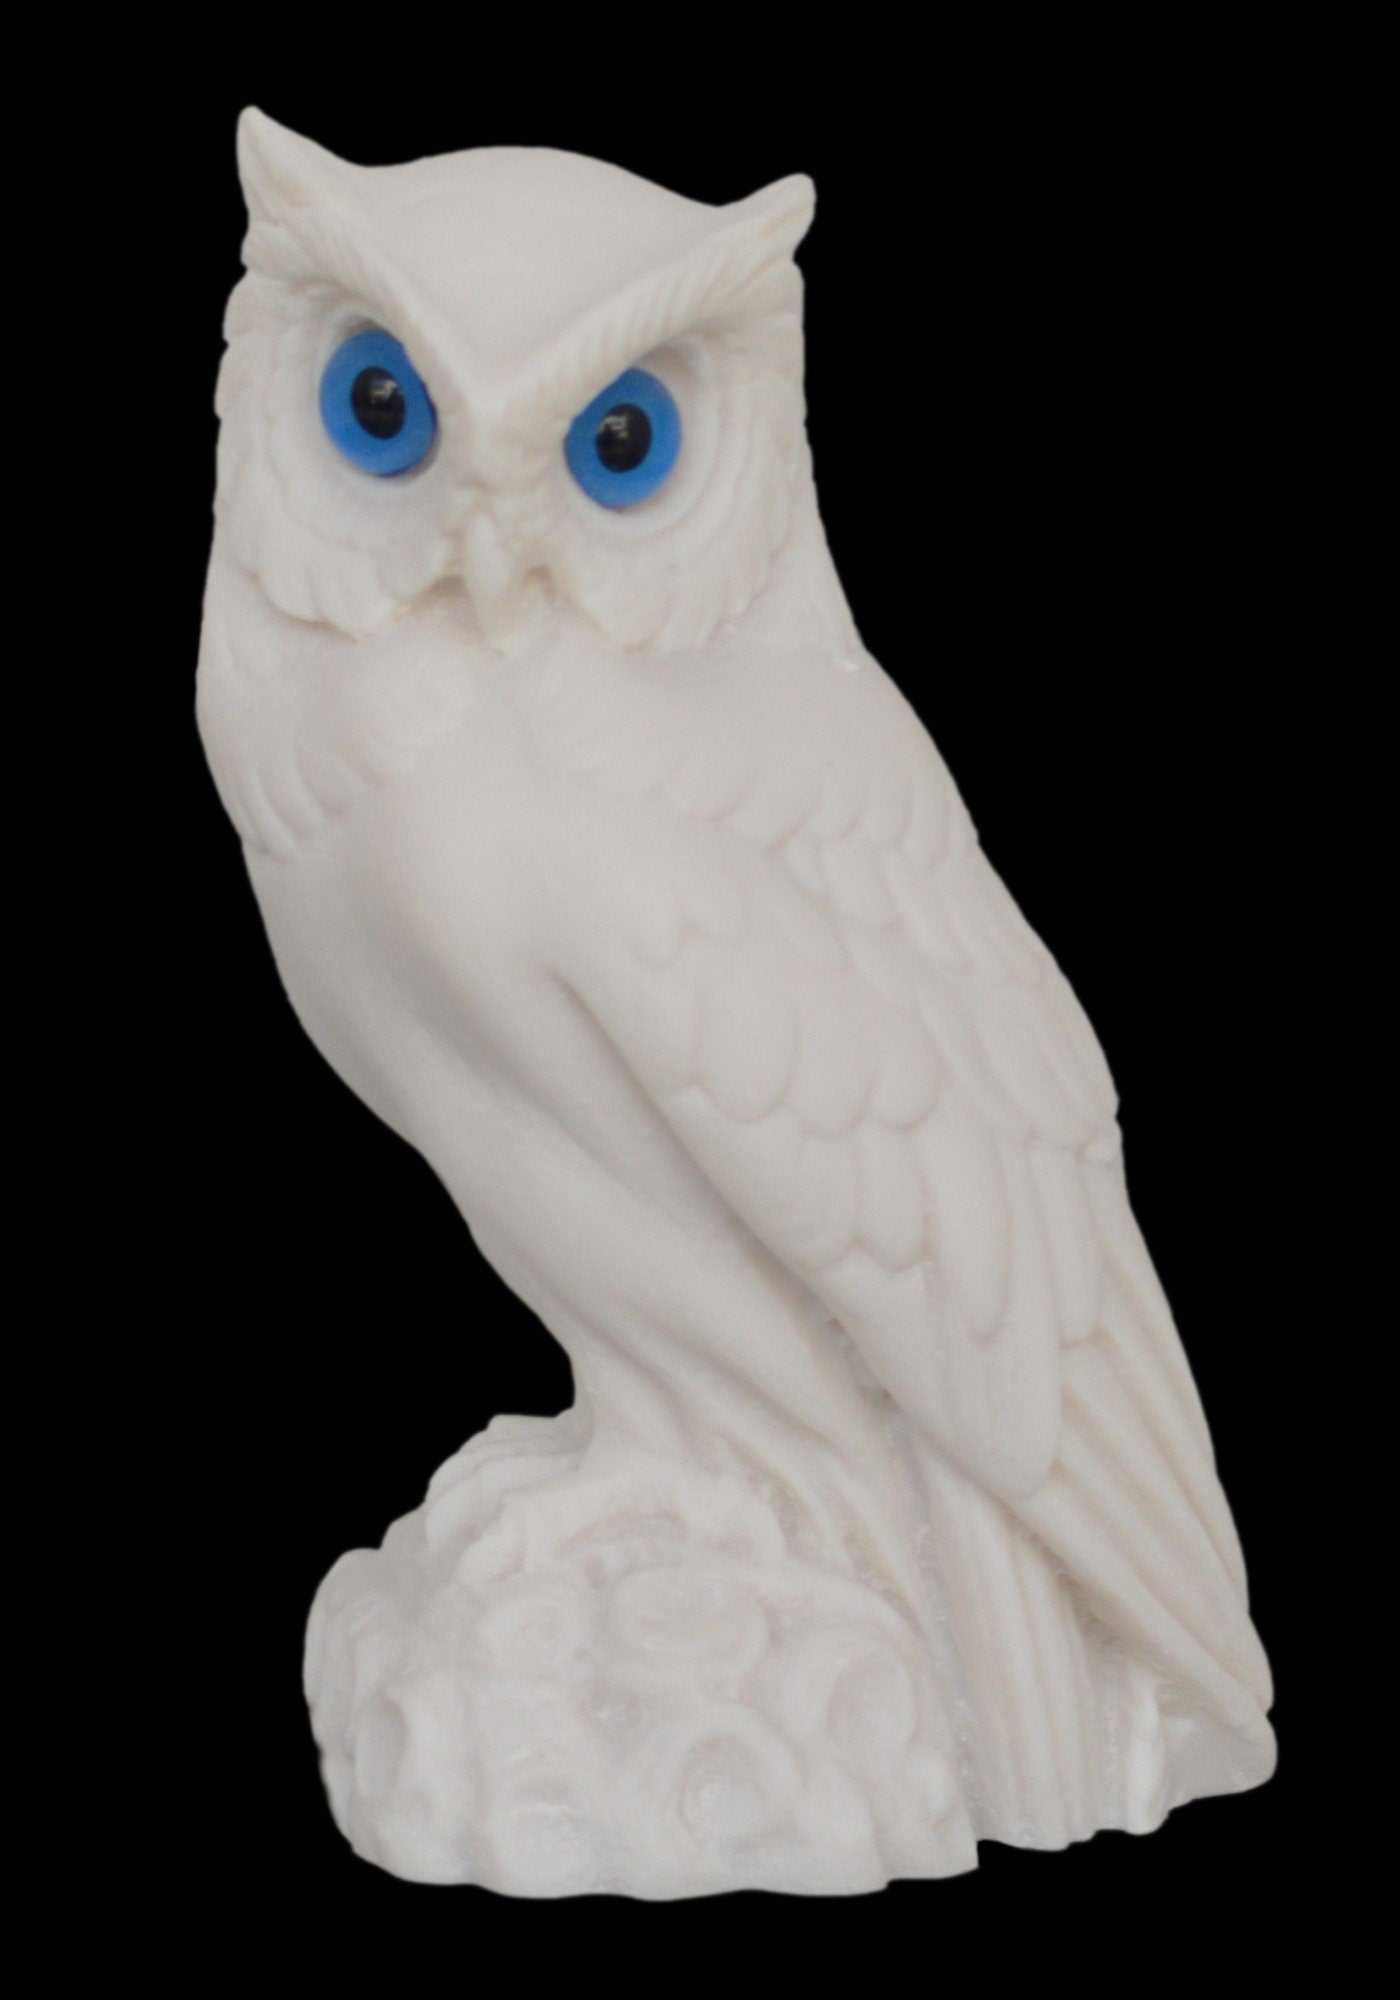 Owl Of Wisdom and Knowledge - Symbol of Goddess Athena Minerva - Ancient Greece - Alabaster Sculpture